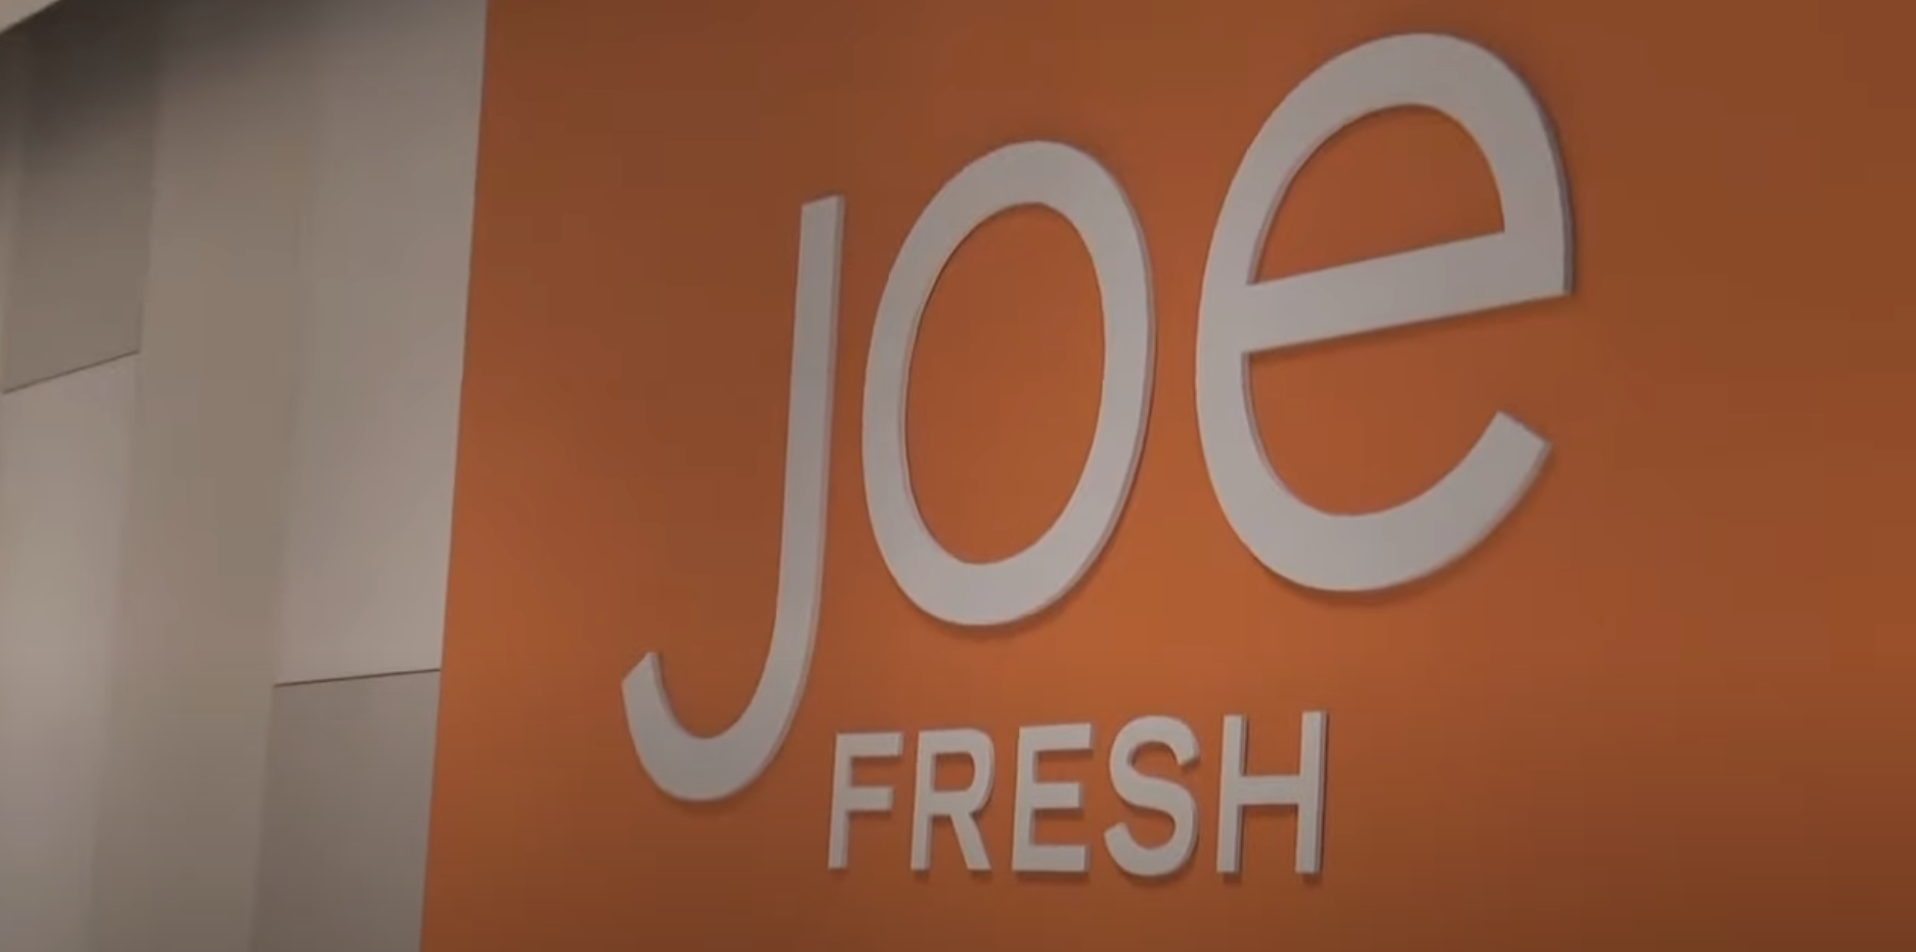 joe fresh store image